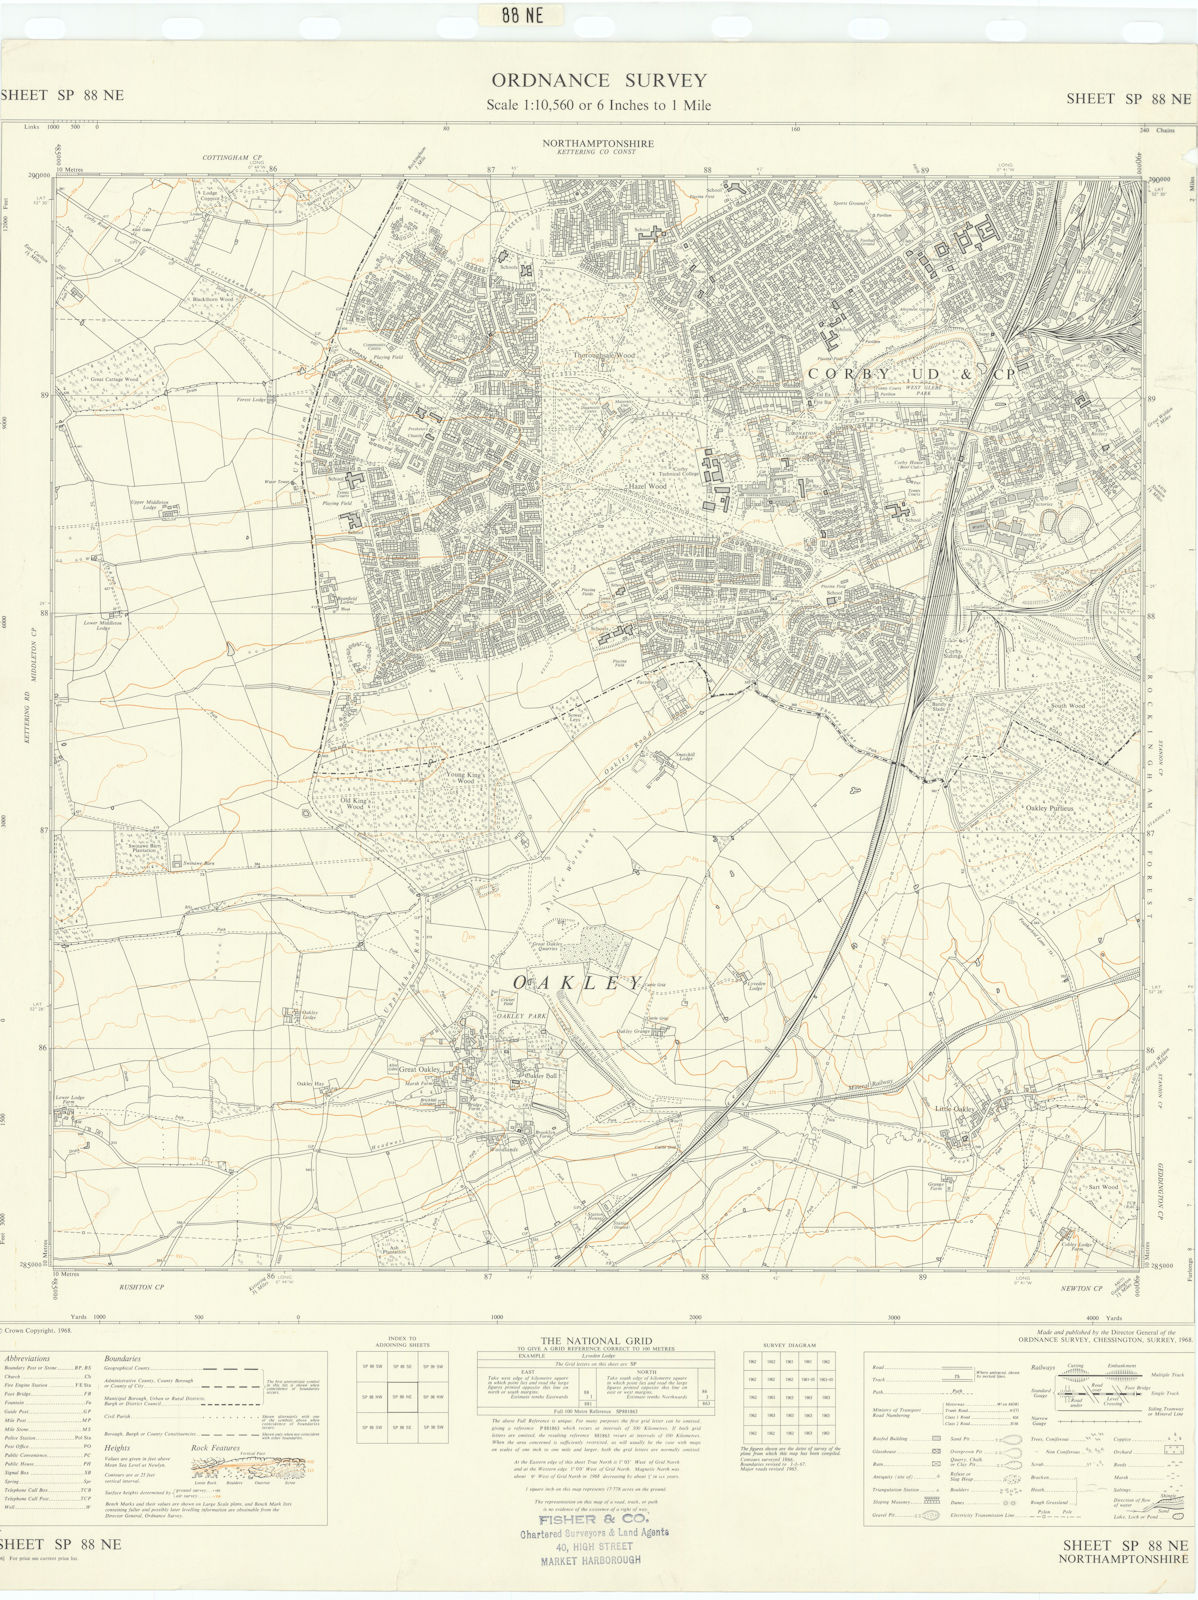 Ordnance Survey Sheet SP88NE Northamptonshire Corby Great Oakley 1968 old map